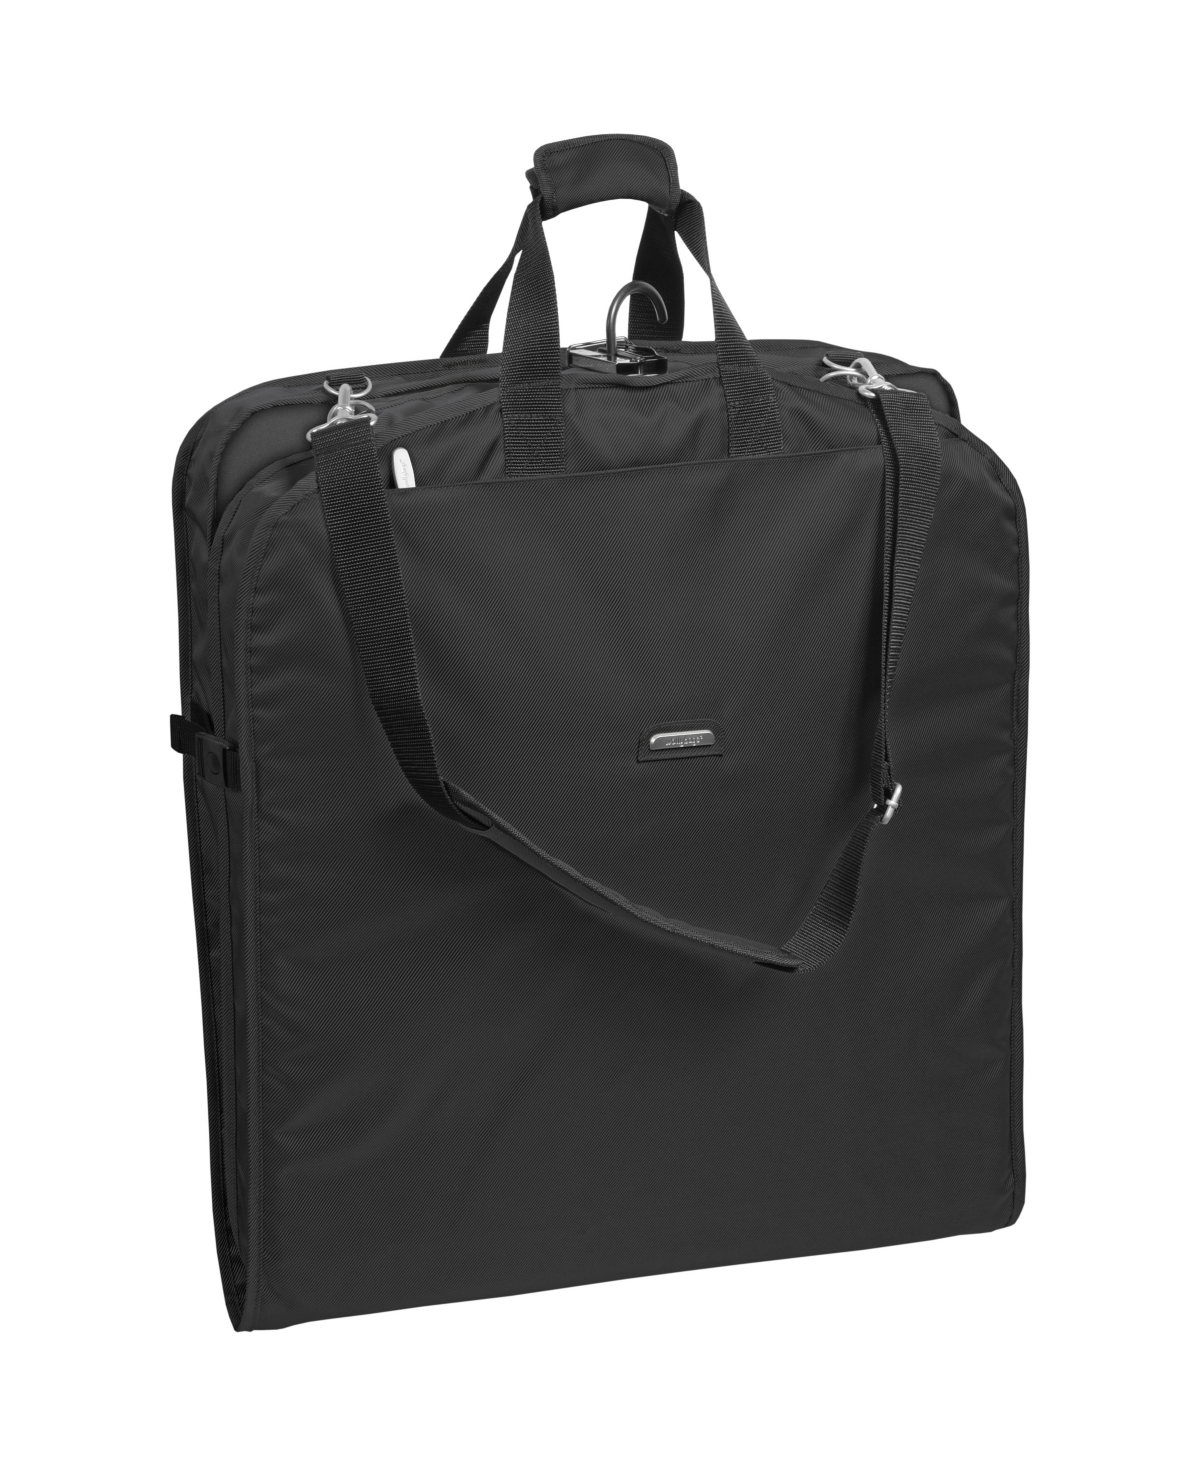 45" Premium Extra Capacity Travel Garment Bag with Shoulder Strap and Pockets - Black